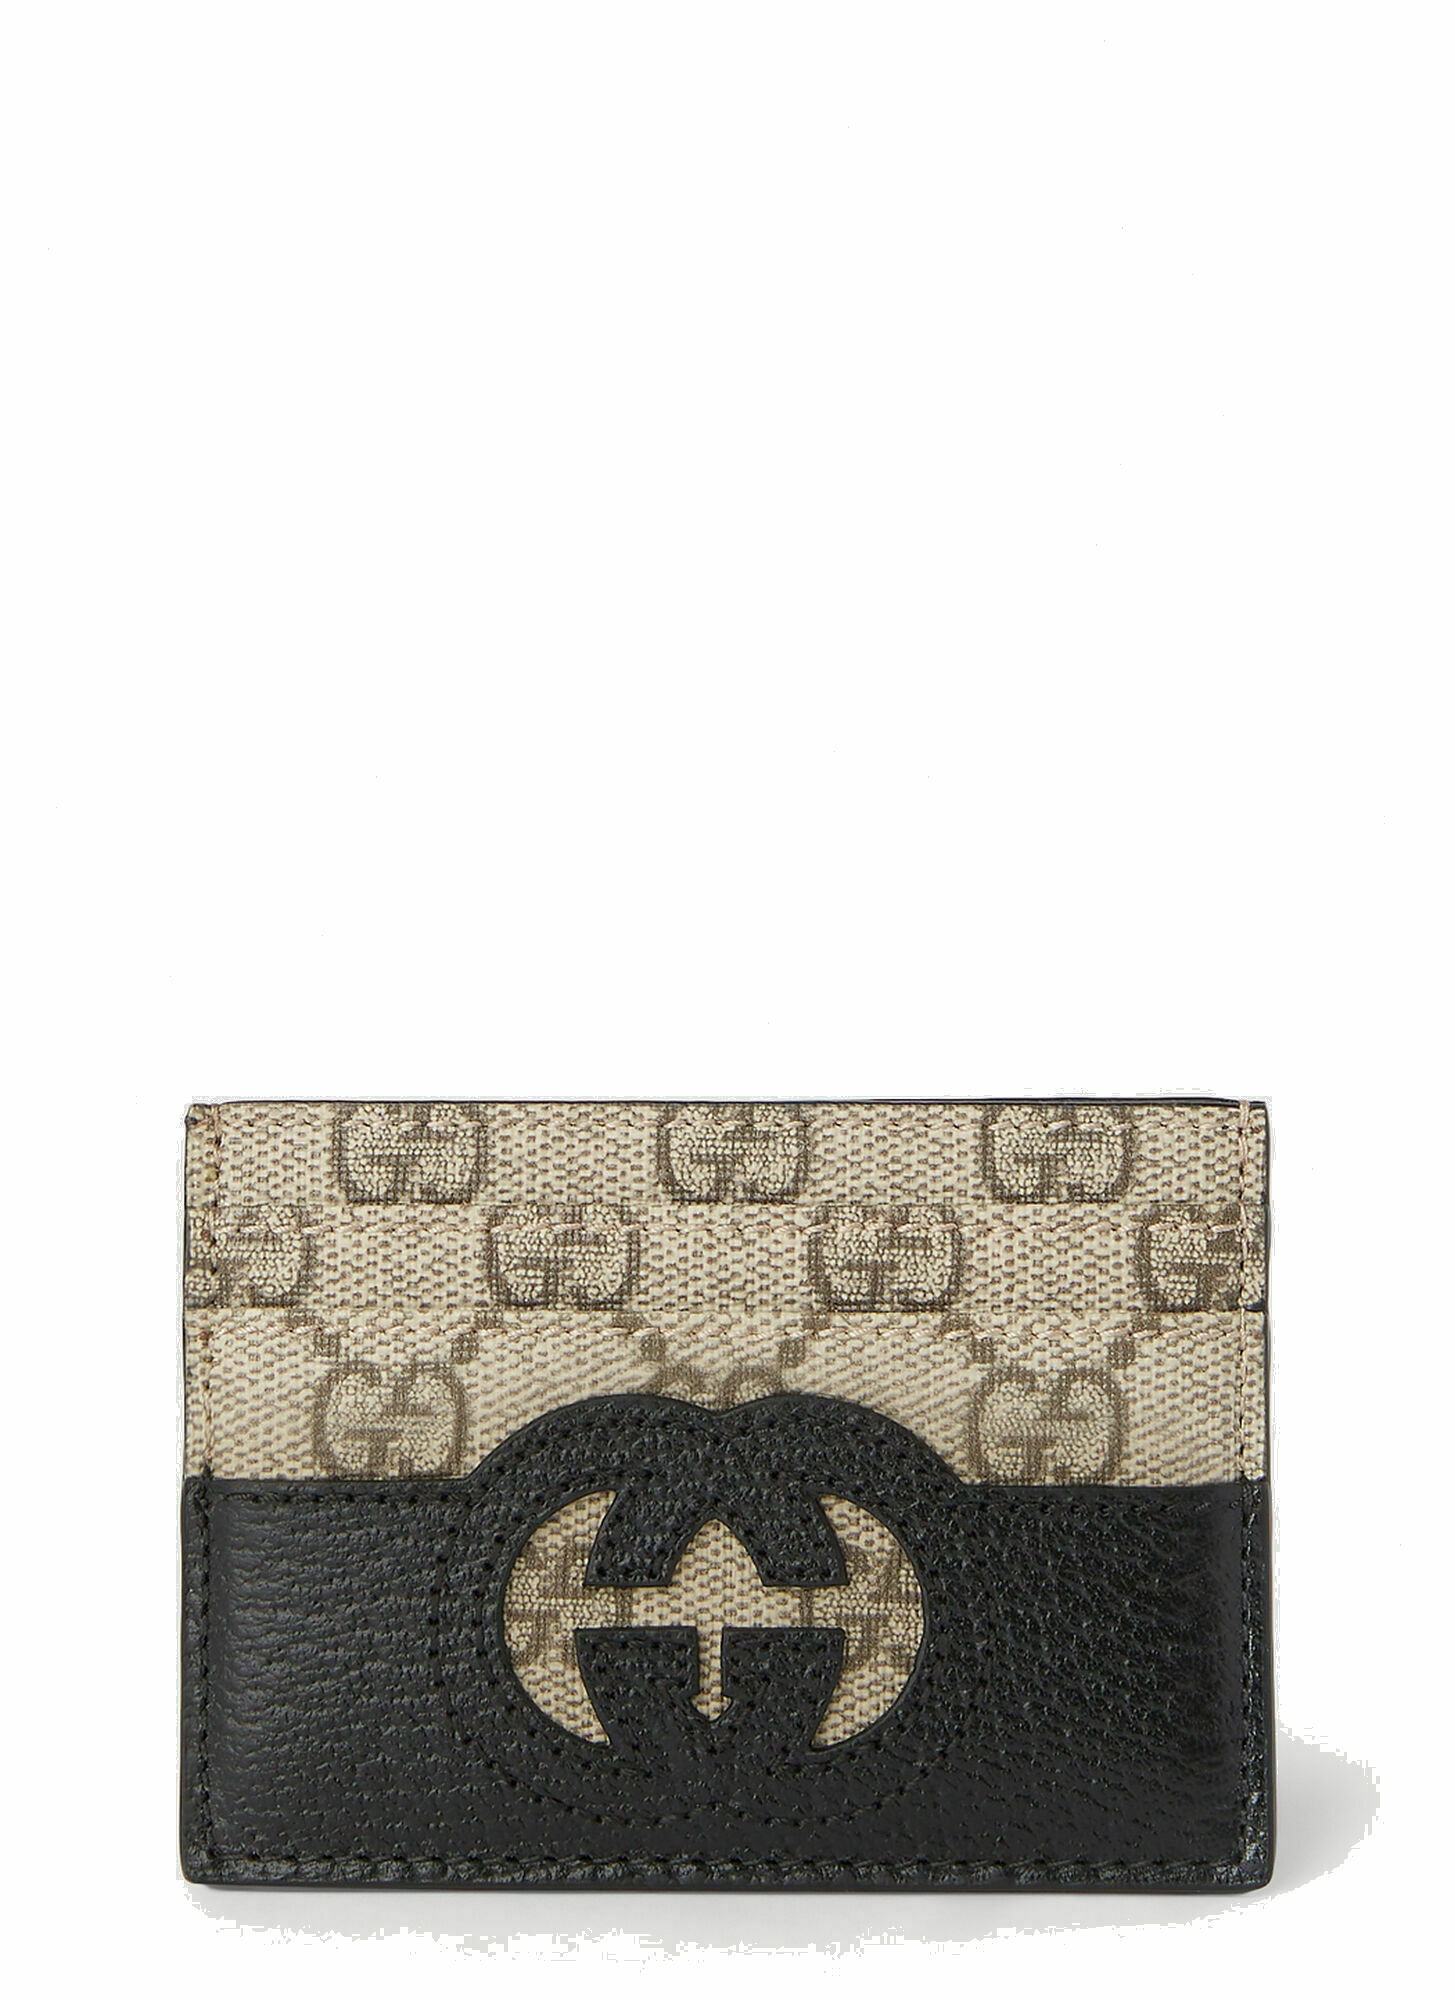 Gucci - Credit card holder for Man - Beige - 67300292TCG-8563